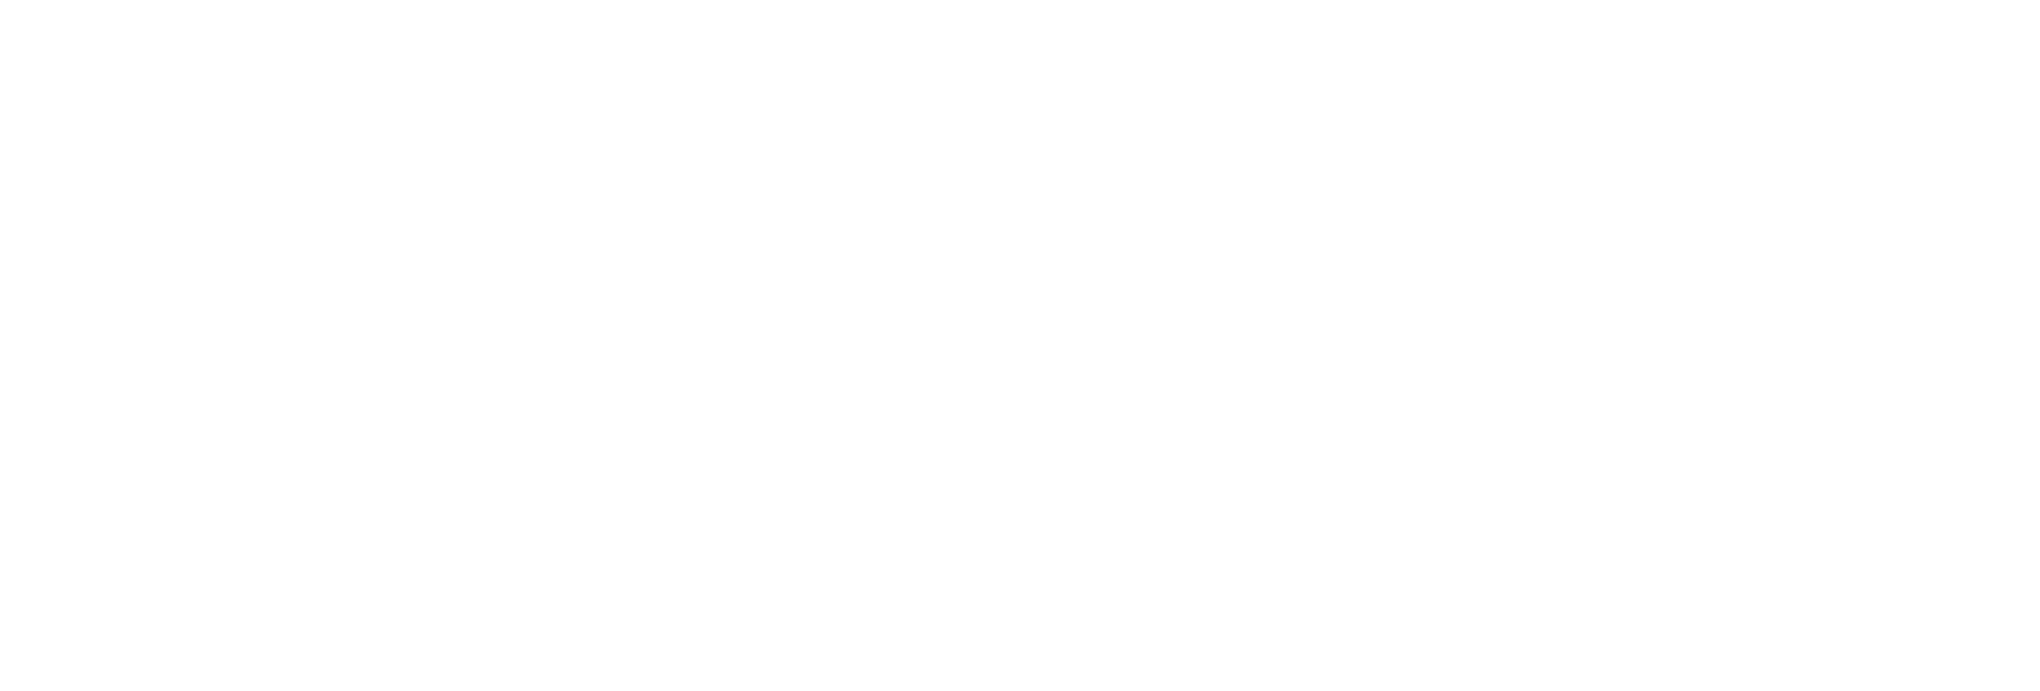 AACSB Accreditation Logo 